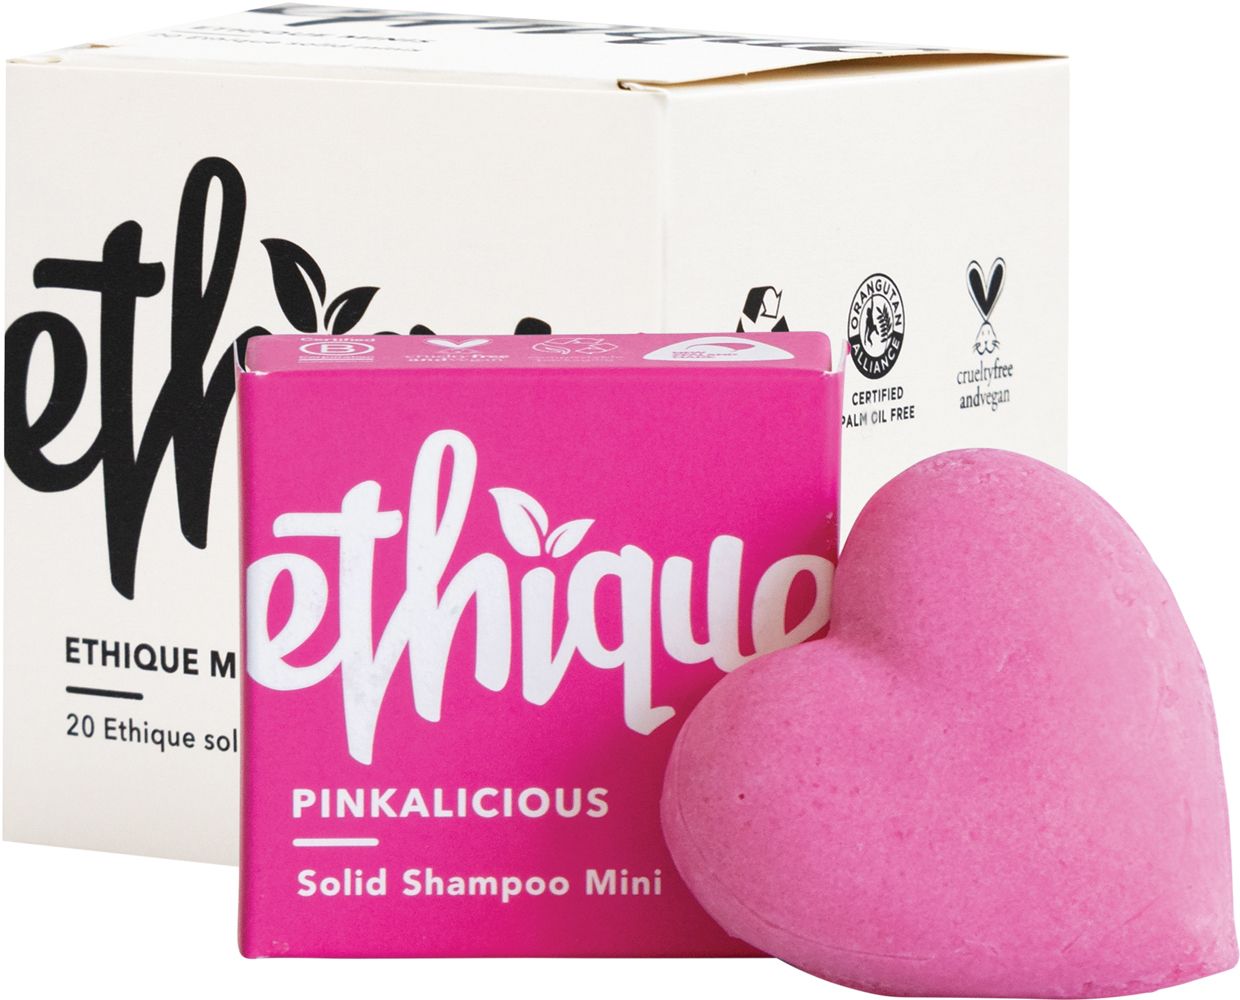 Ethique Solid Shampoo Bar Pinkalicious - Normal Hair